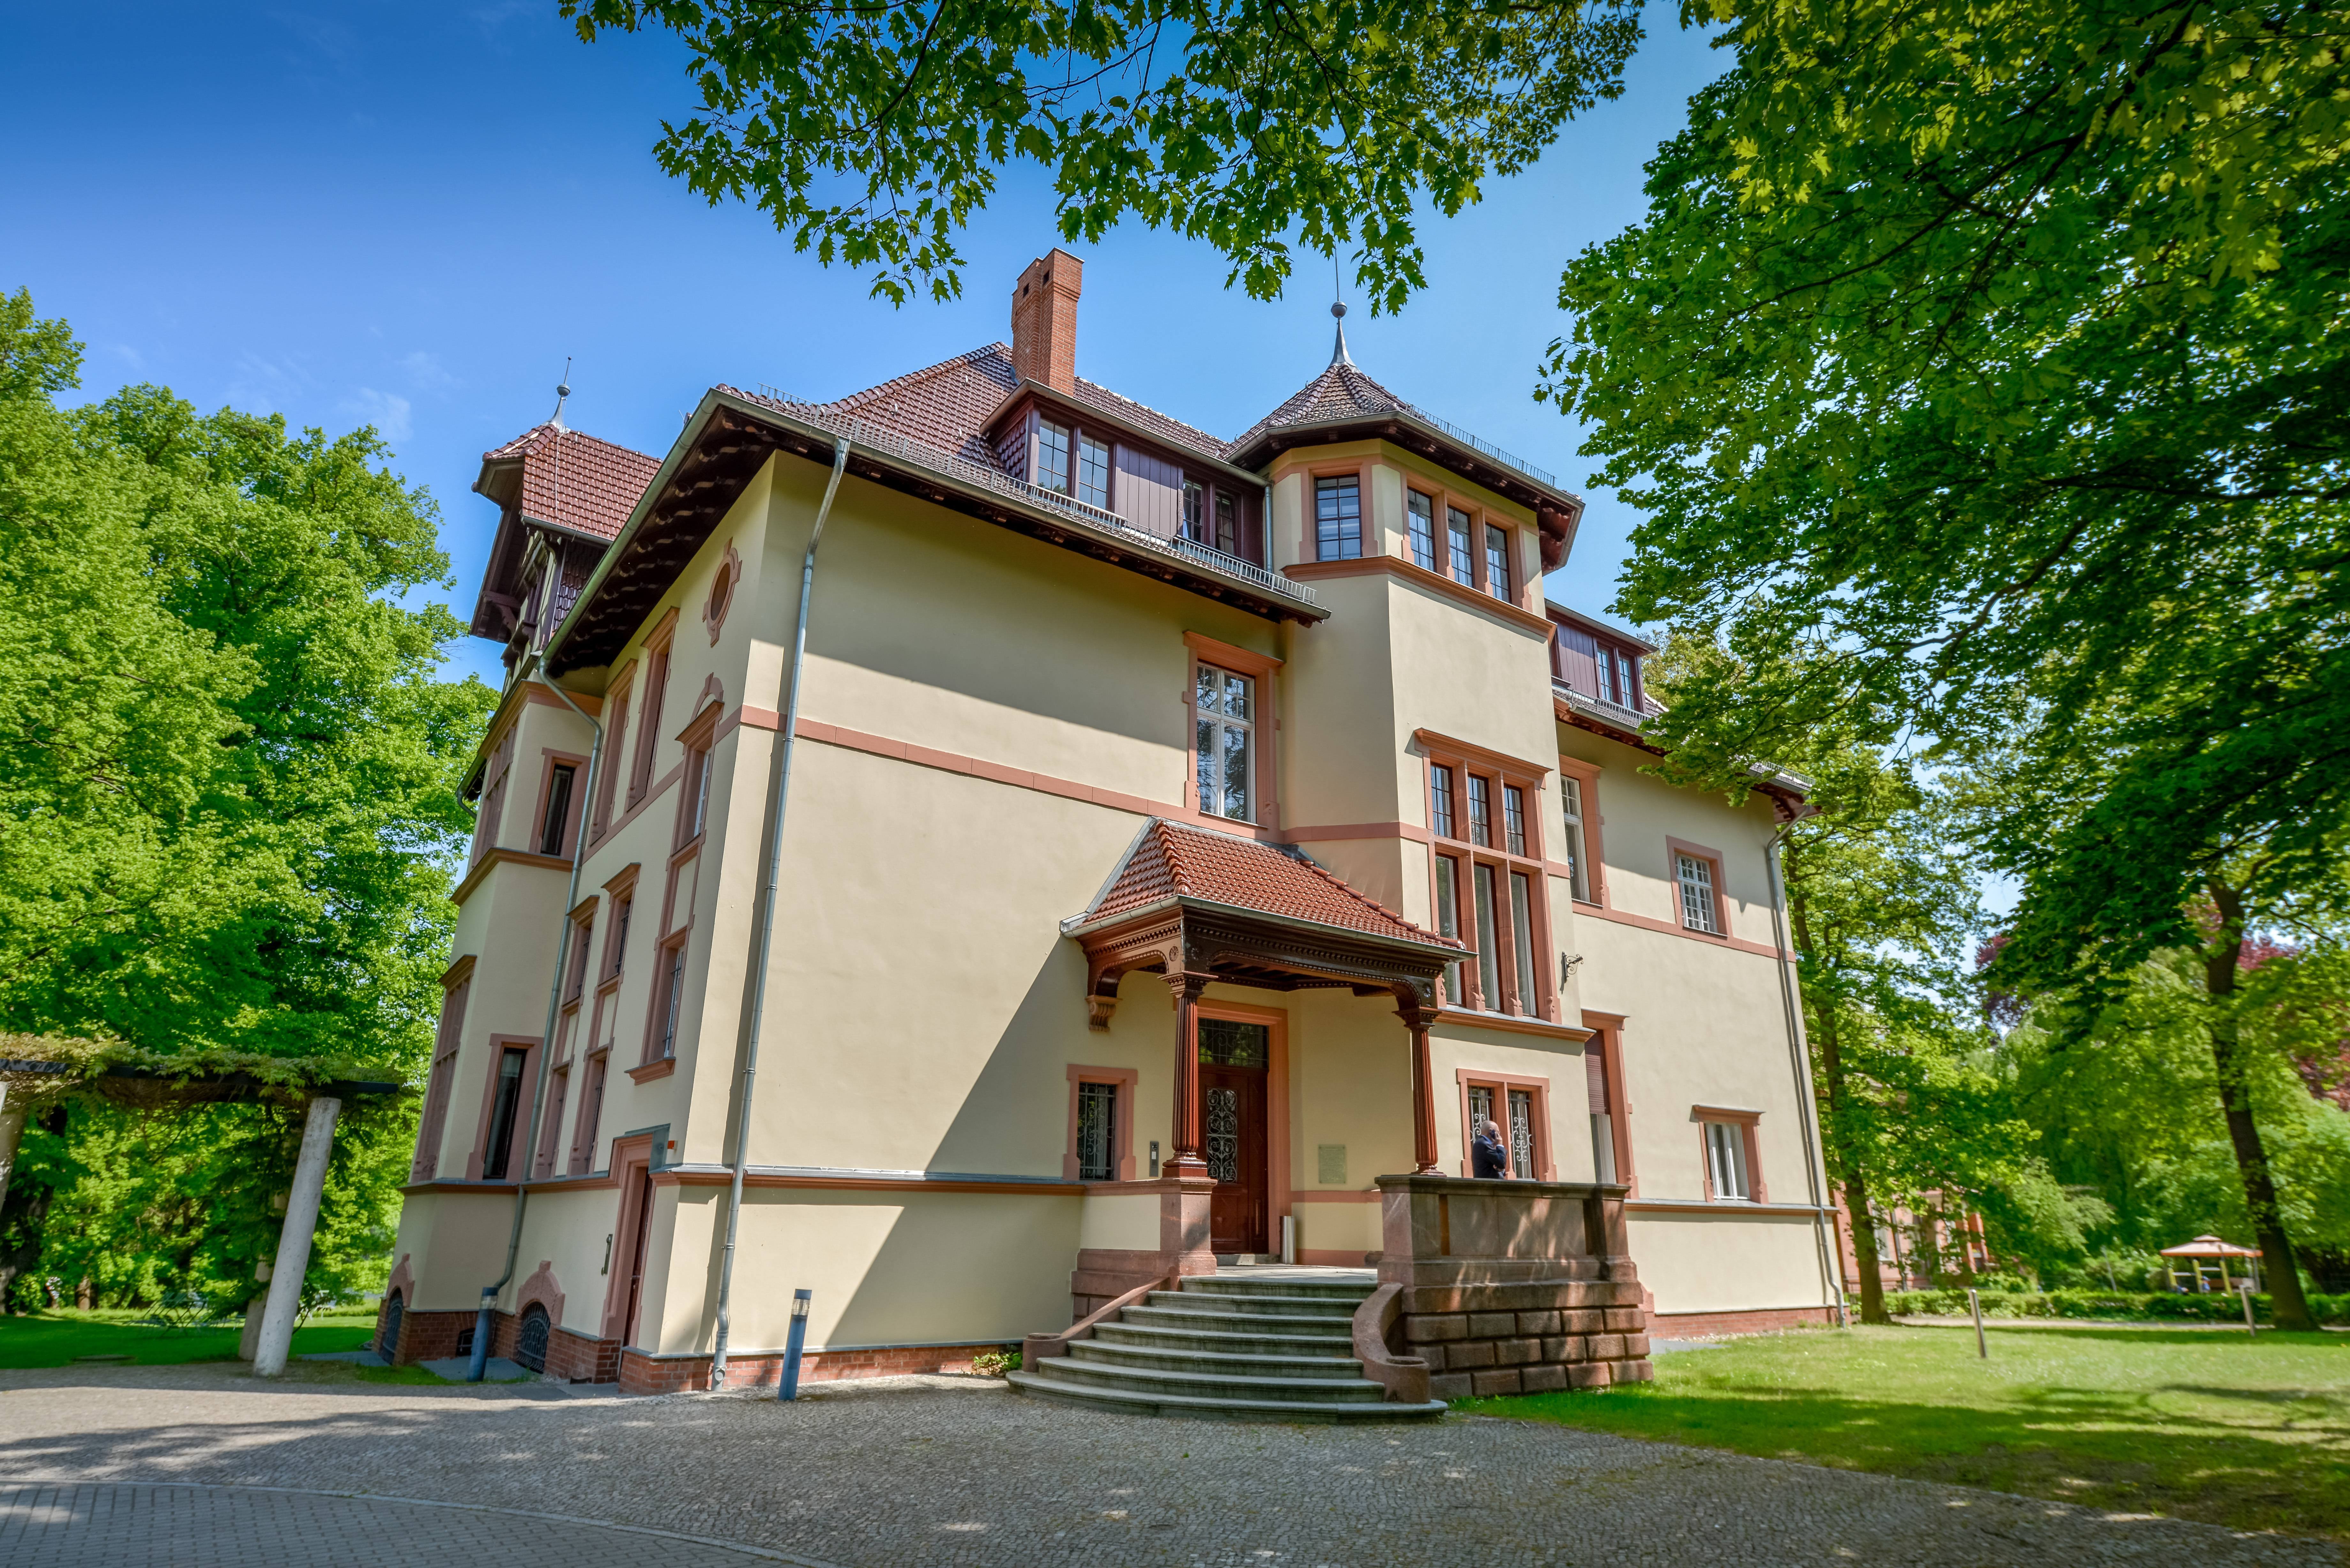 Die Truman-Villa in Potsdam Babelsberg